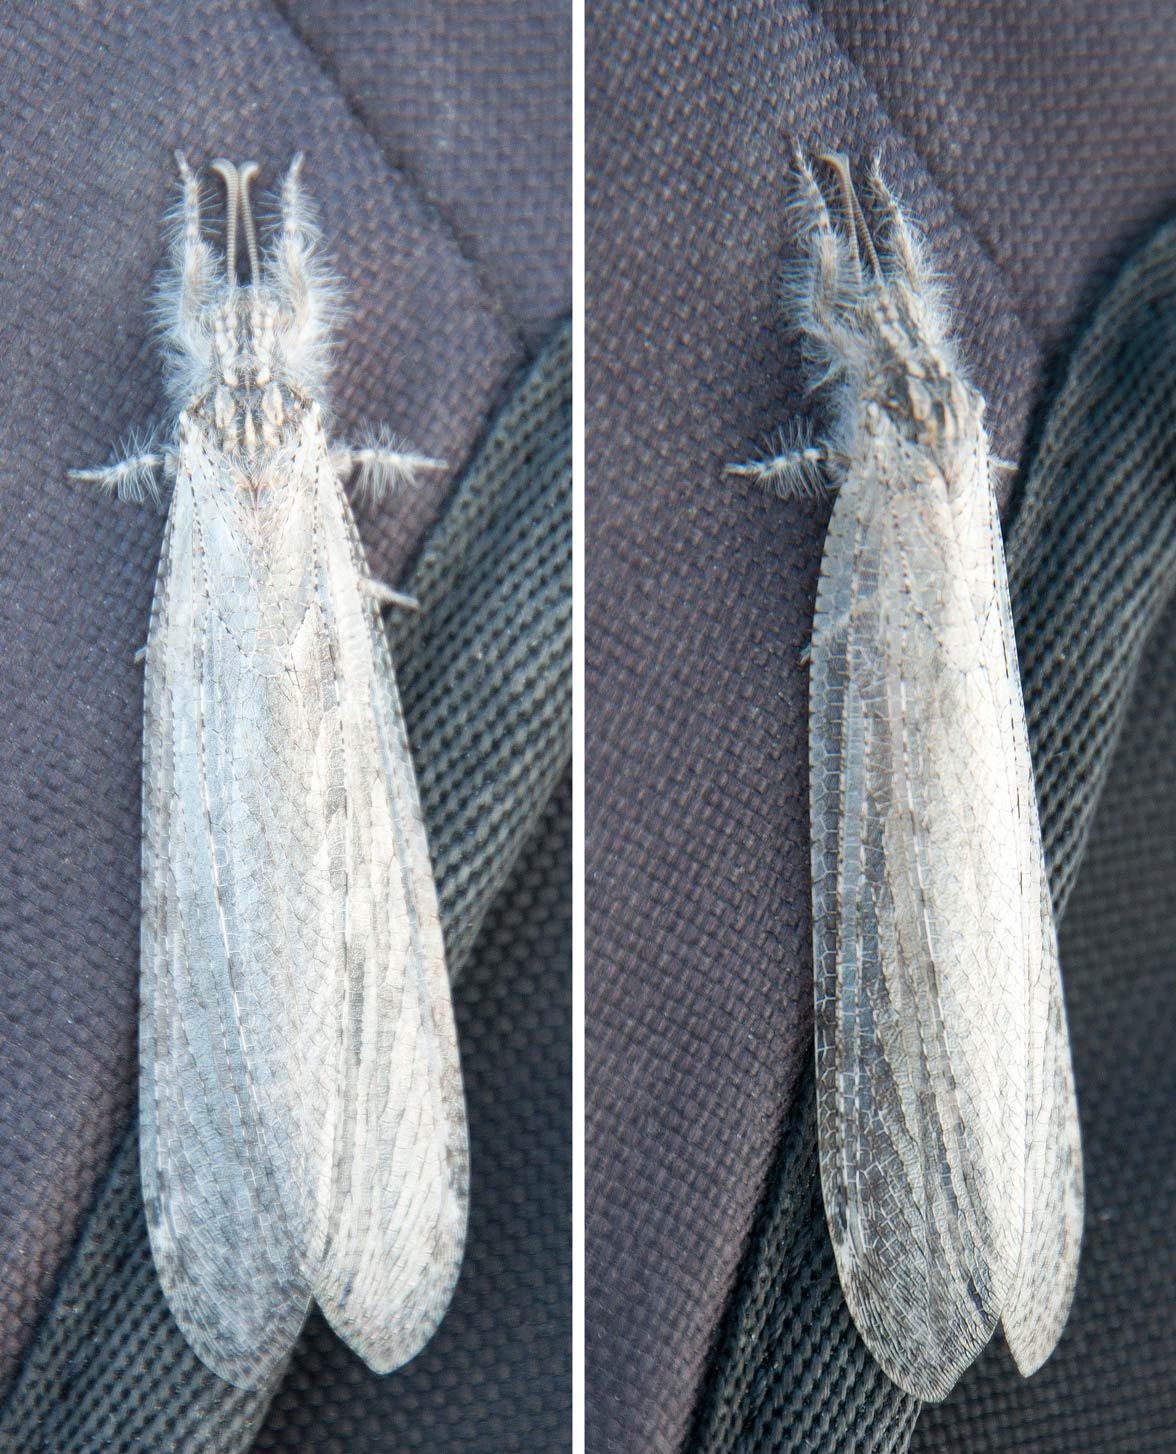 Myrmeleontidae:  Synclisis baetica